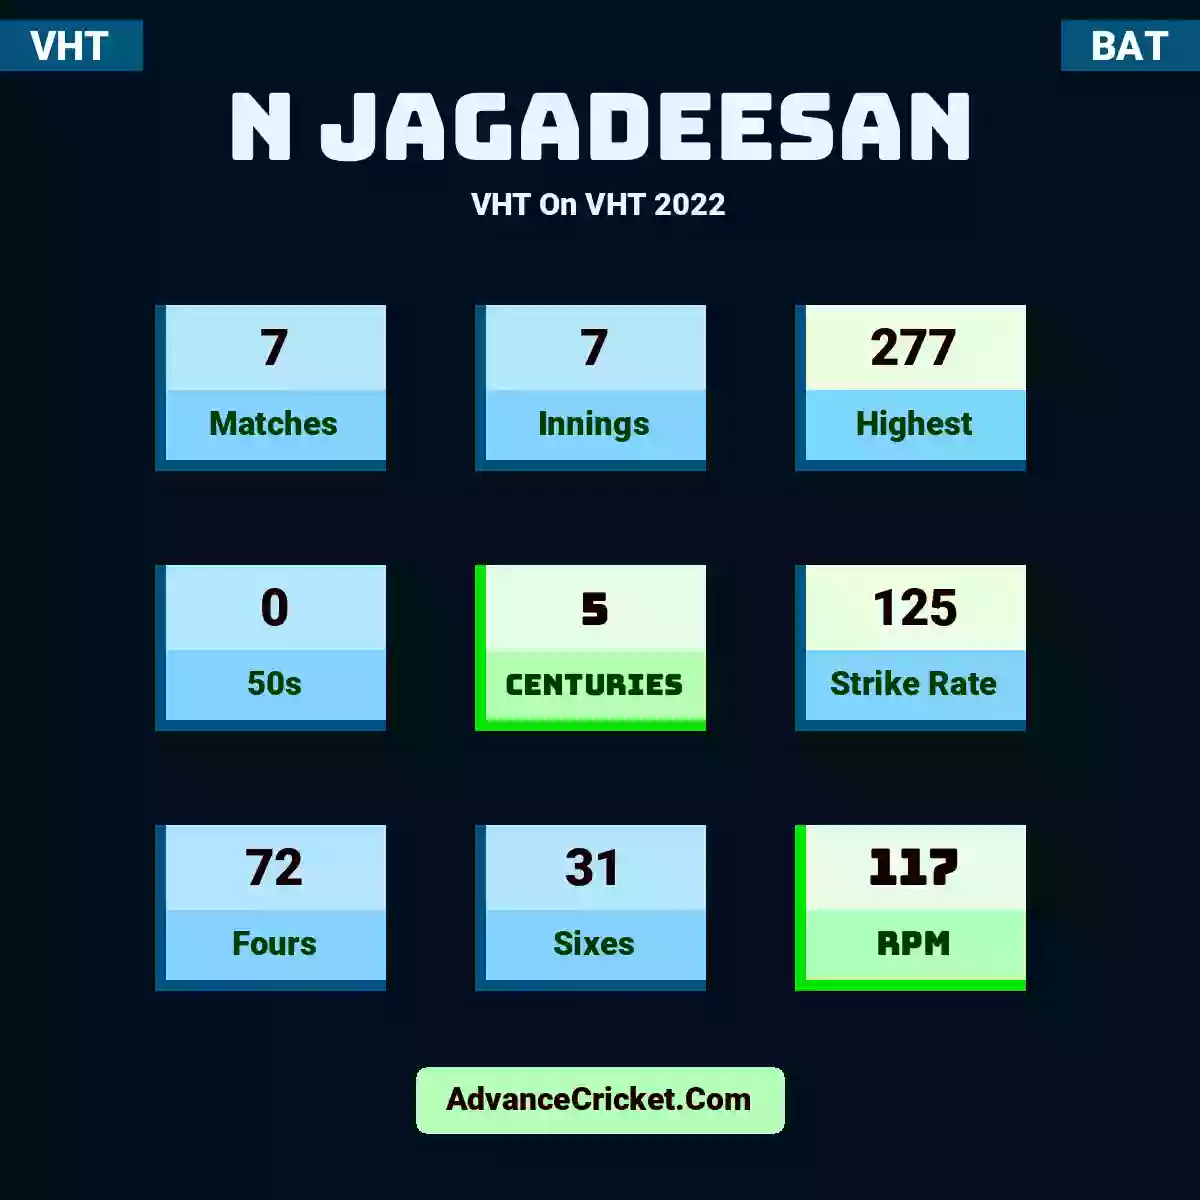 N Jagadeesan VHT  On VHT 2022, N Jagadeesan played 7 matches, scored 277 runs as highest, 0 half-centuries, and 5 centuries, with a strike rate of 125. N.Jagadeesan hit 72 fours and 31 sixes, with an RPM of 117.